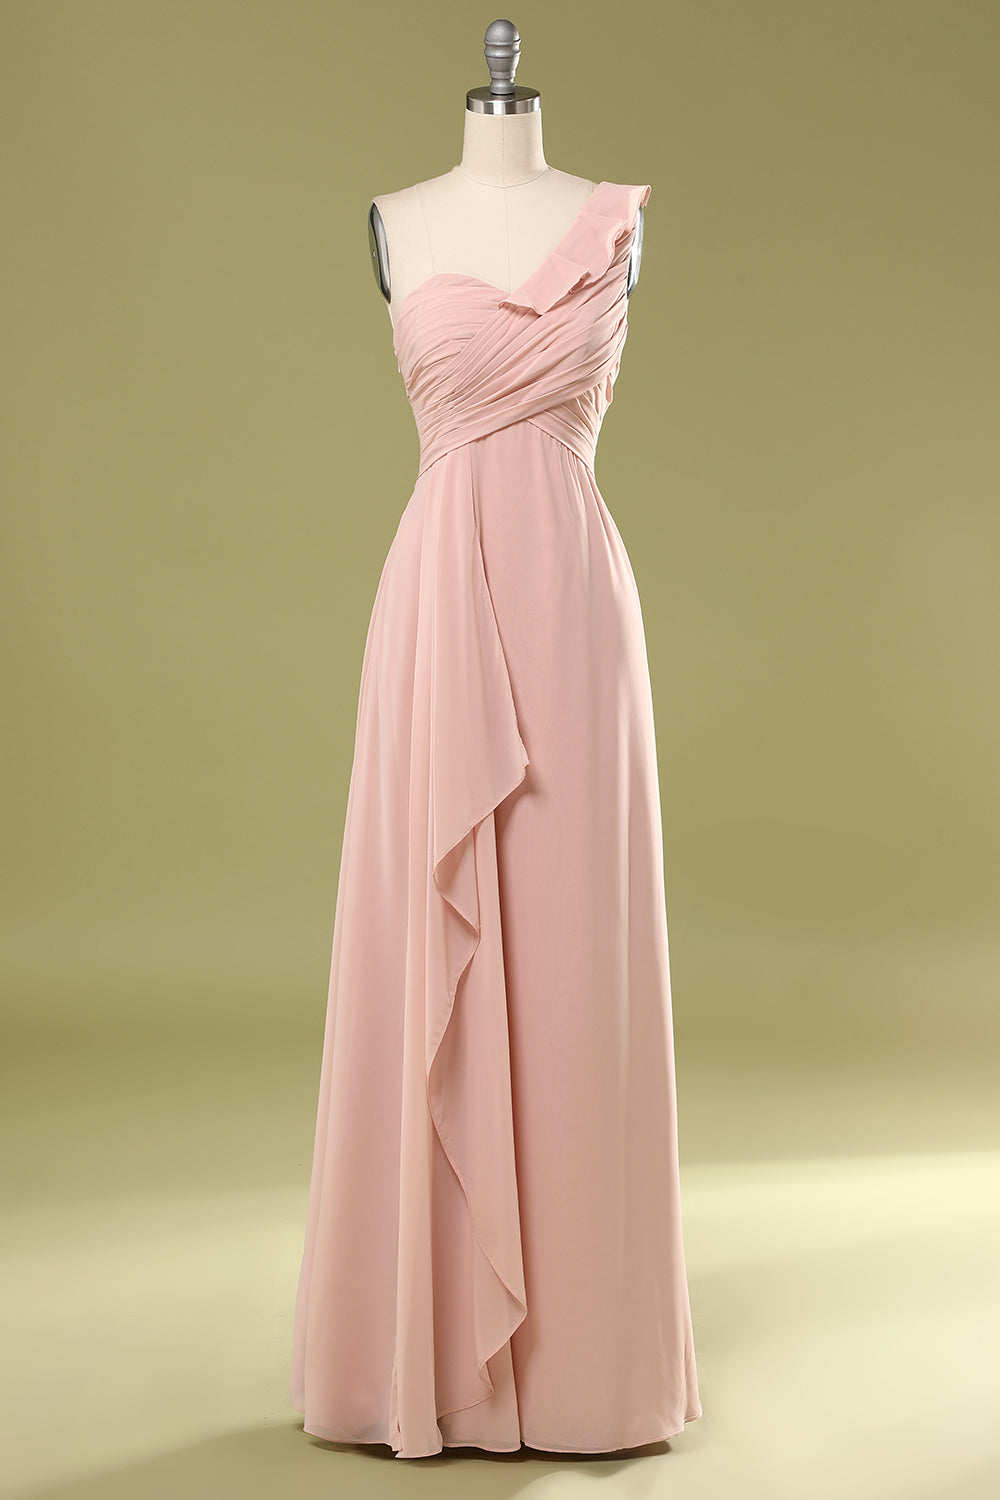 One Shoulder Blush Pink Chiffon Long Bridesmaid DressOne Shoulder Blush Pink Chiffon Long Bridesmaid Dress